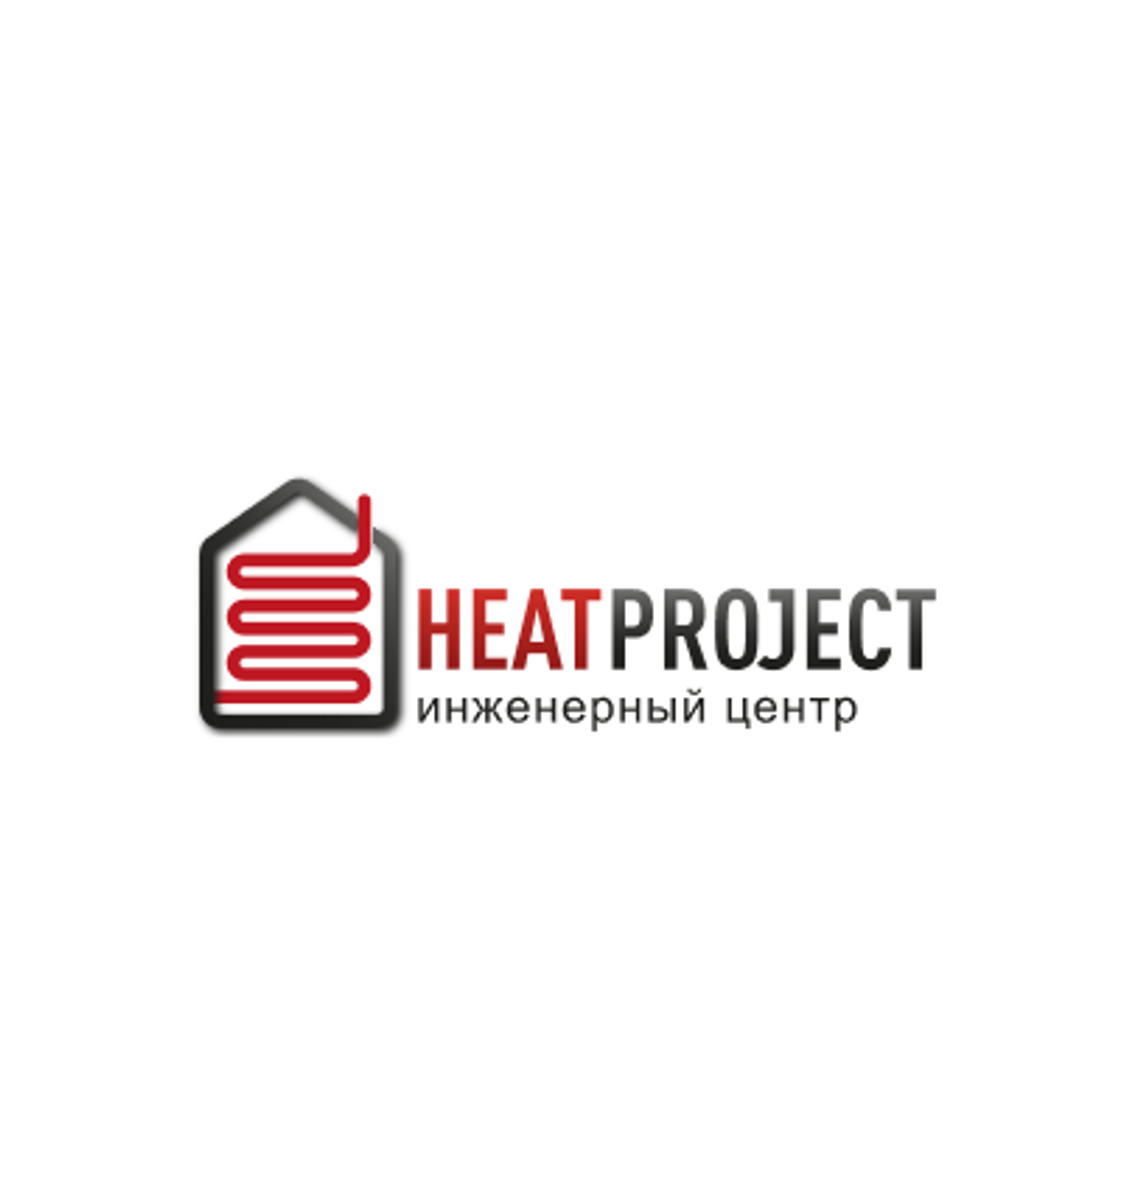 Heatproject